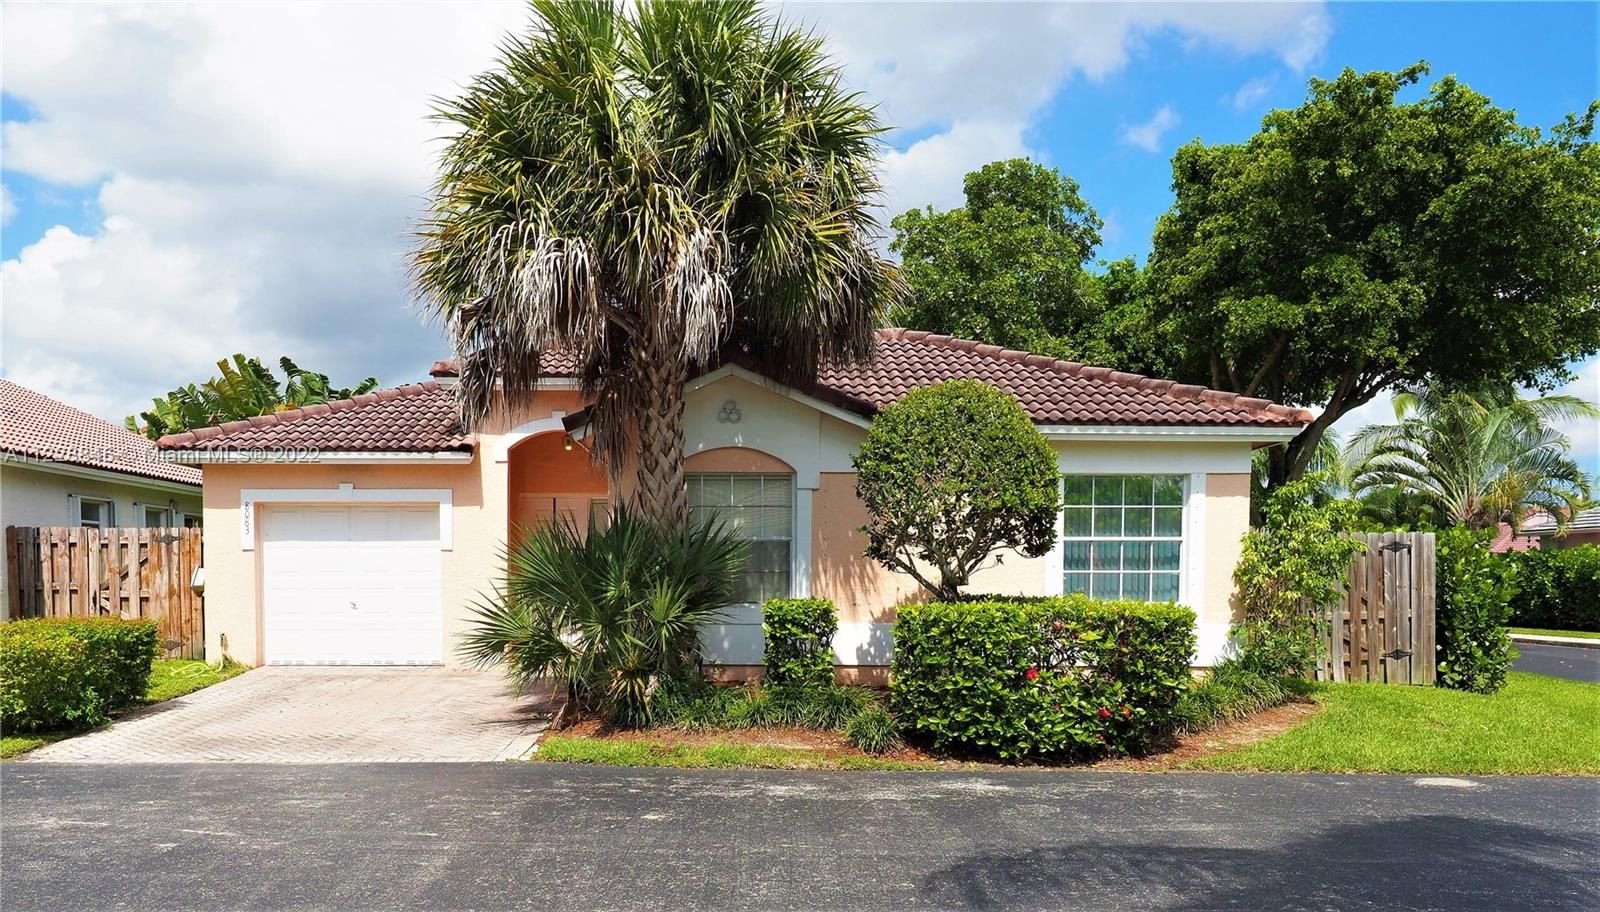 Real estate property located at 8083 158th Ct, Miami-Dade County, Miami, FL